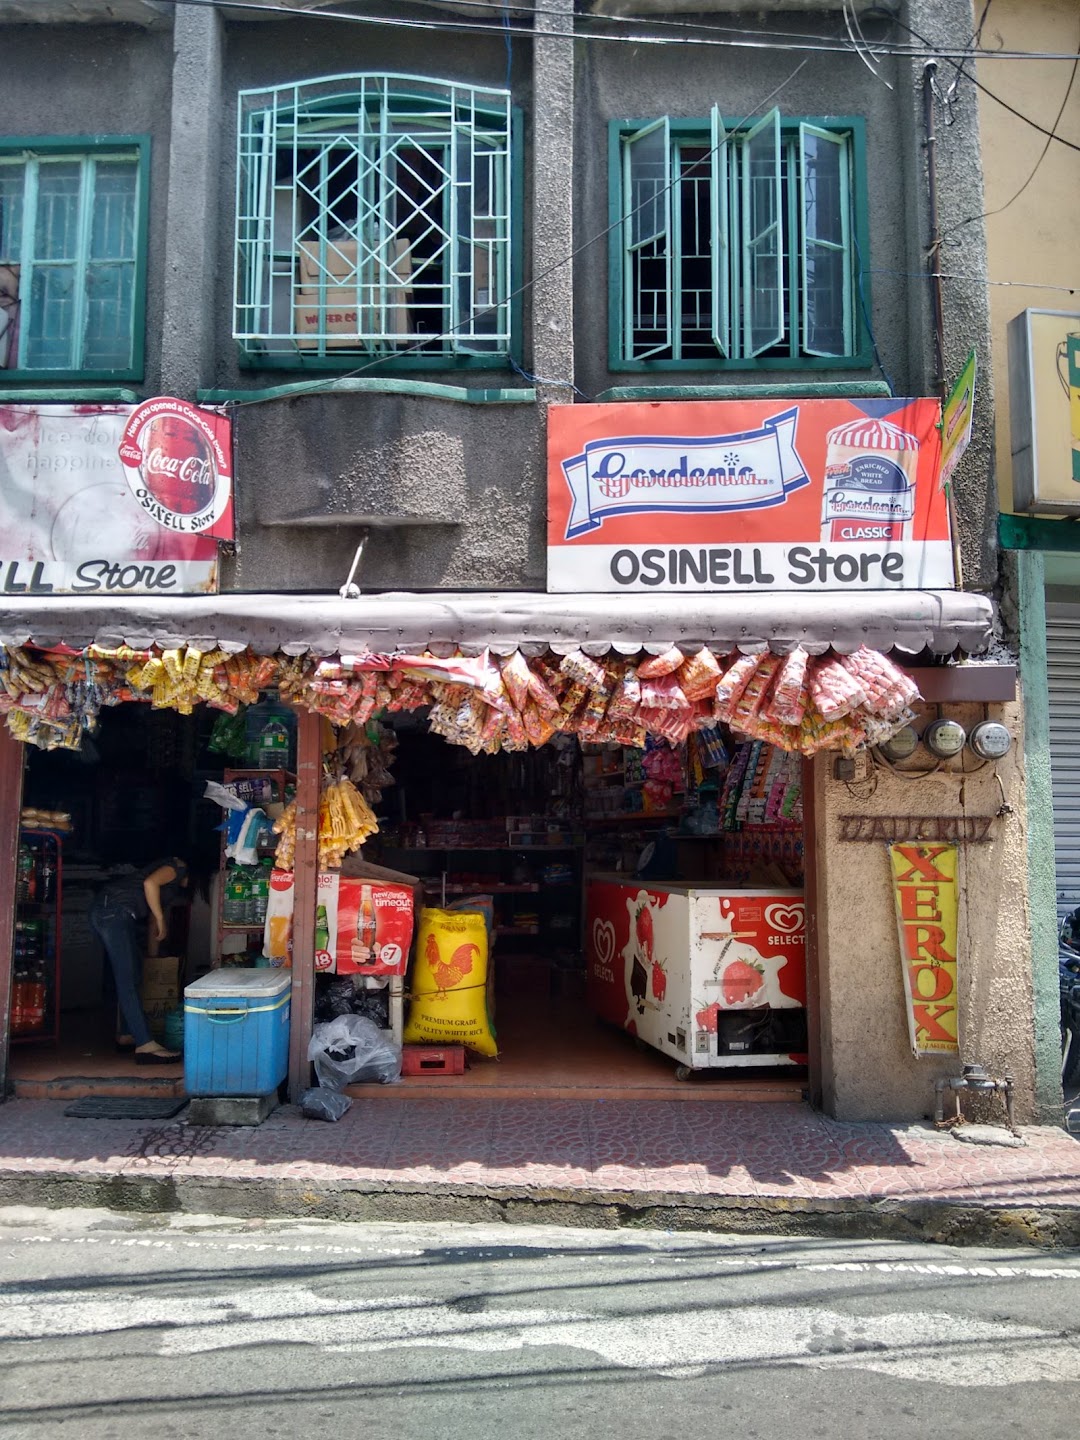 Osinell Store